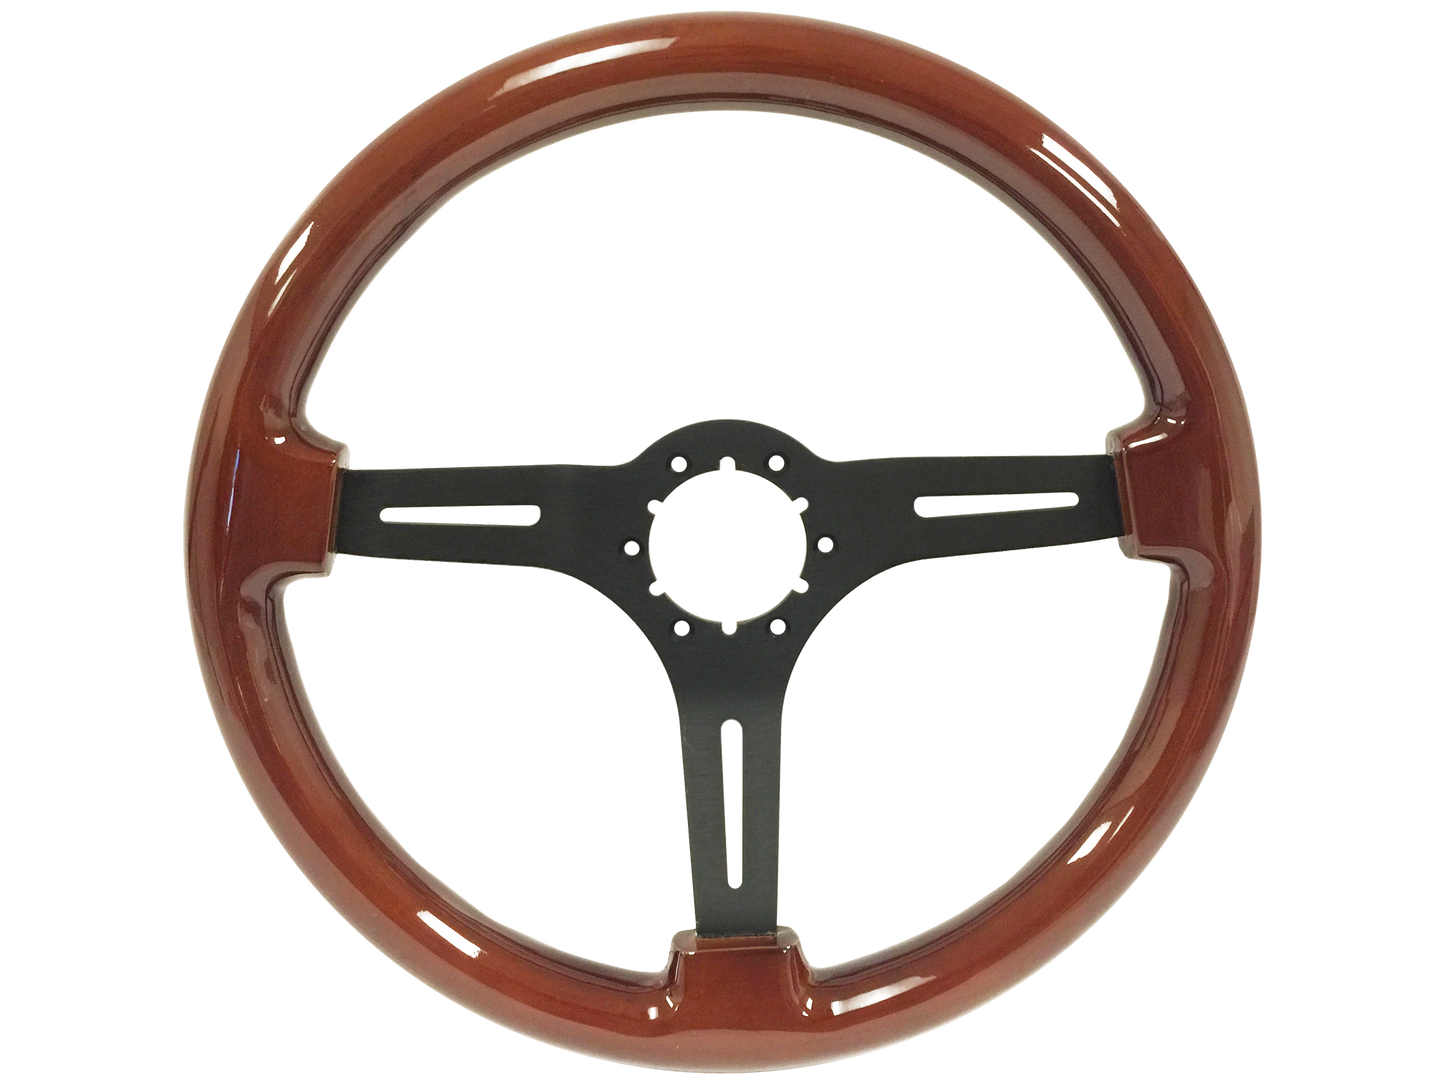 Nissan S15 Steering Wheel Kit | Walnut Wood | ST3027